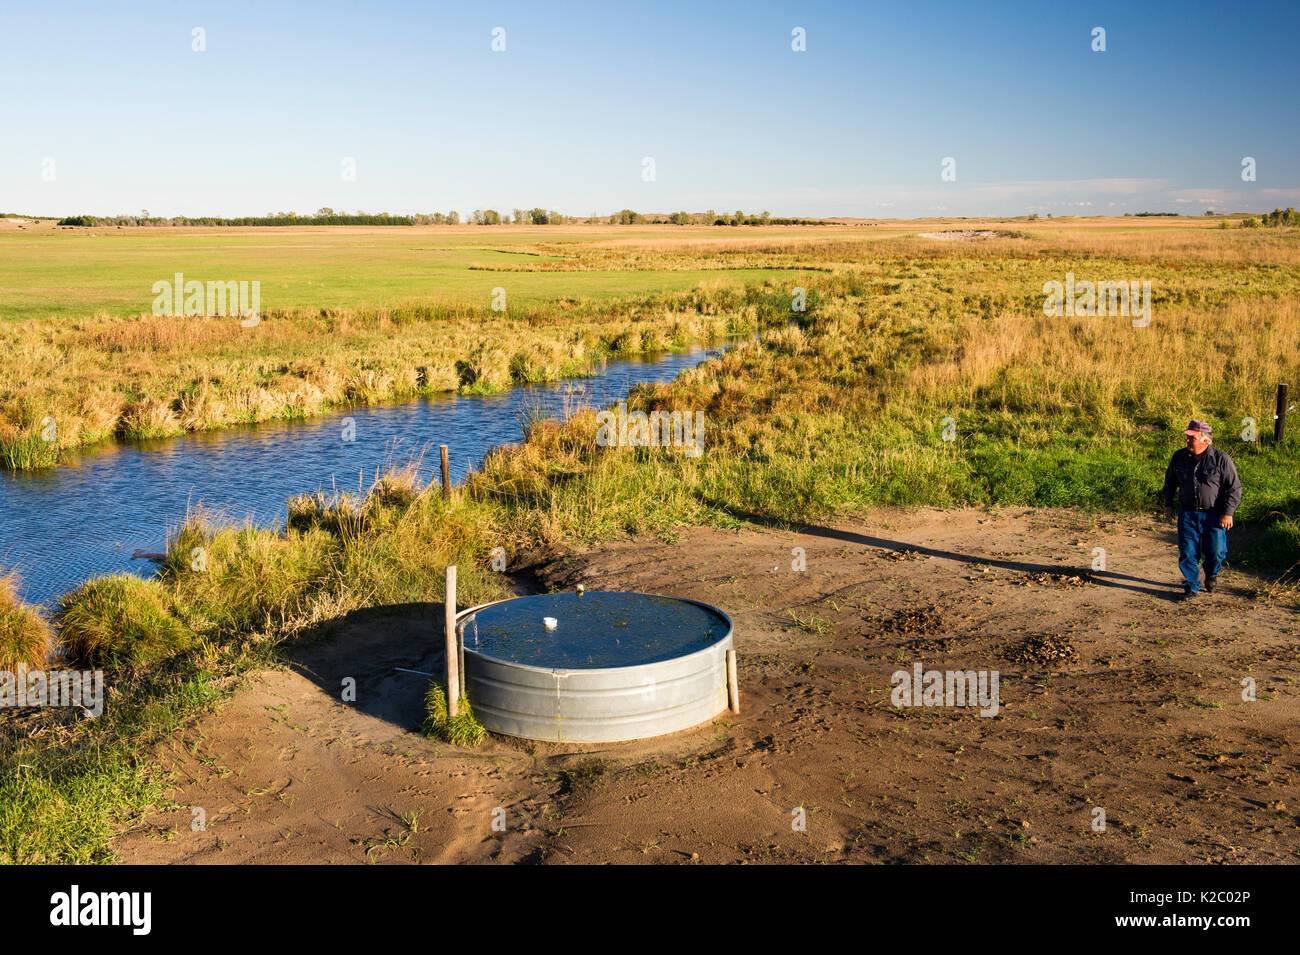 Lynn Ballagh inspecting water well on his cattle ranch in the Sandhills of Nebraska, Garfield County, Nebraska, USA. October 2014. Stock Photo